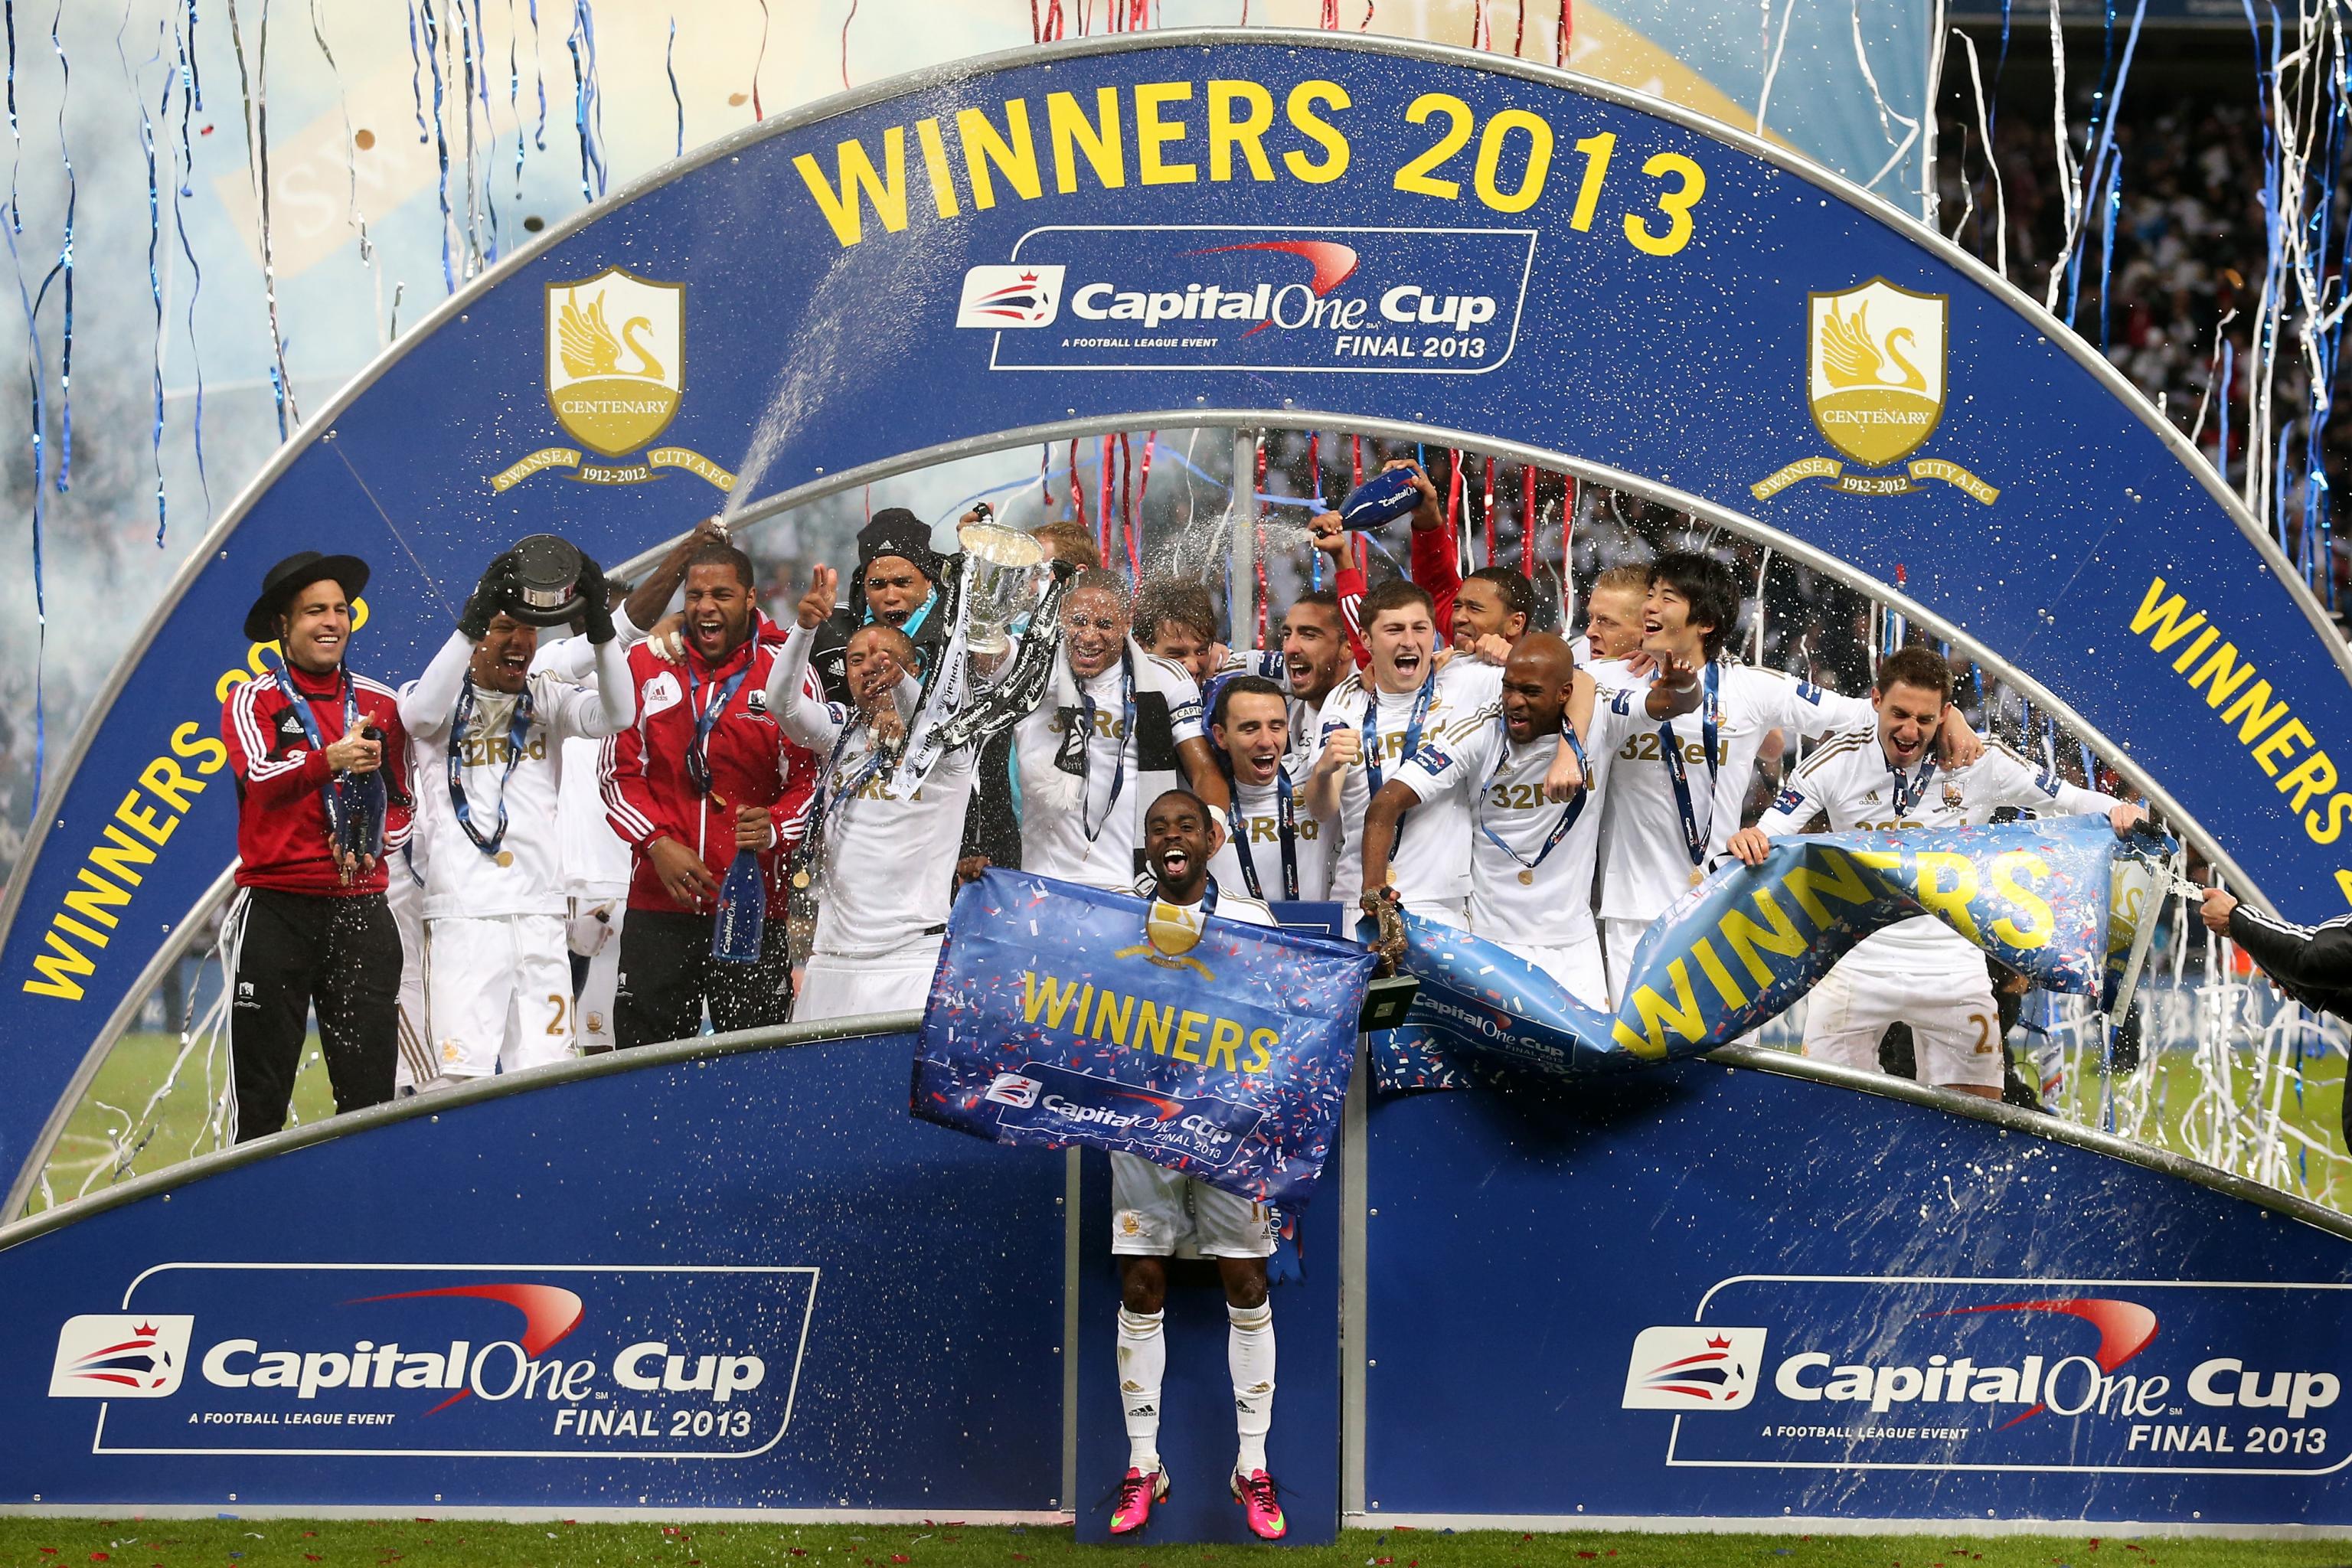 Cup 2013. Swansea City Capital one. Winner 2013.